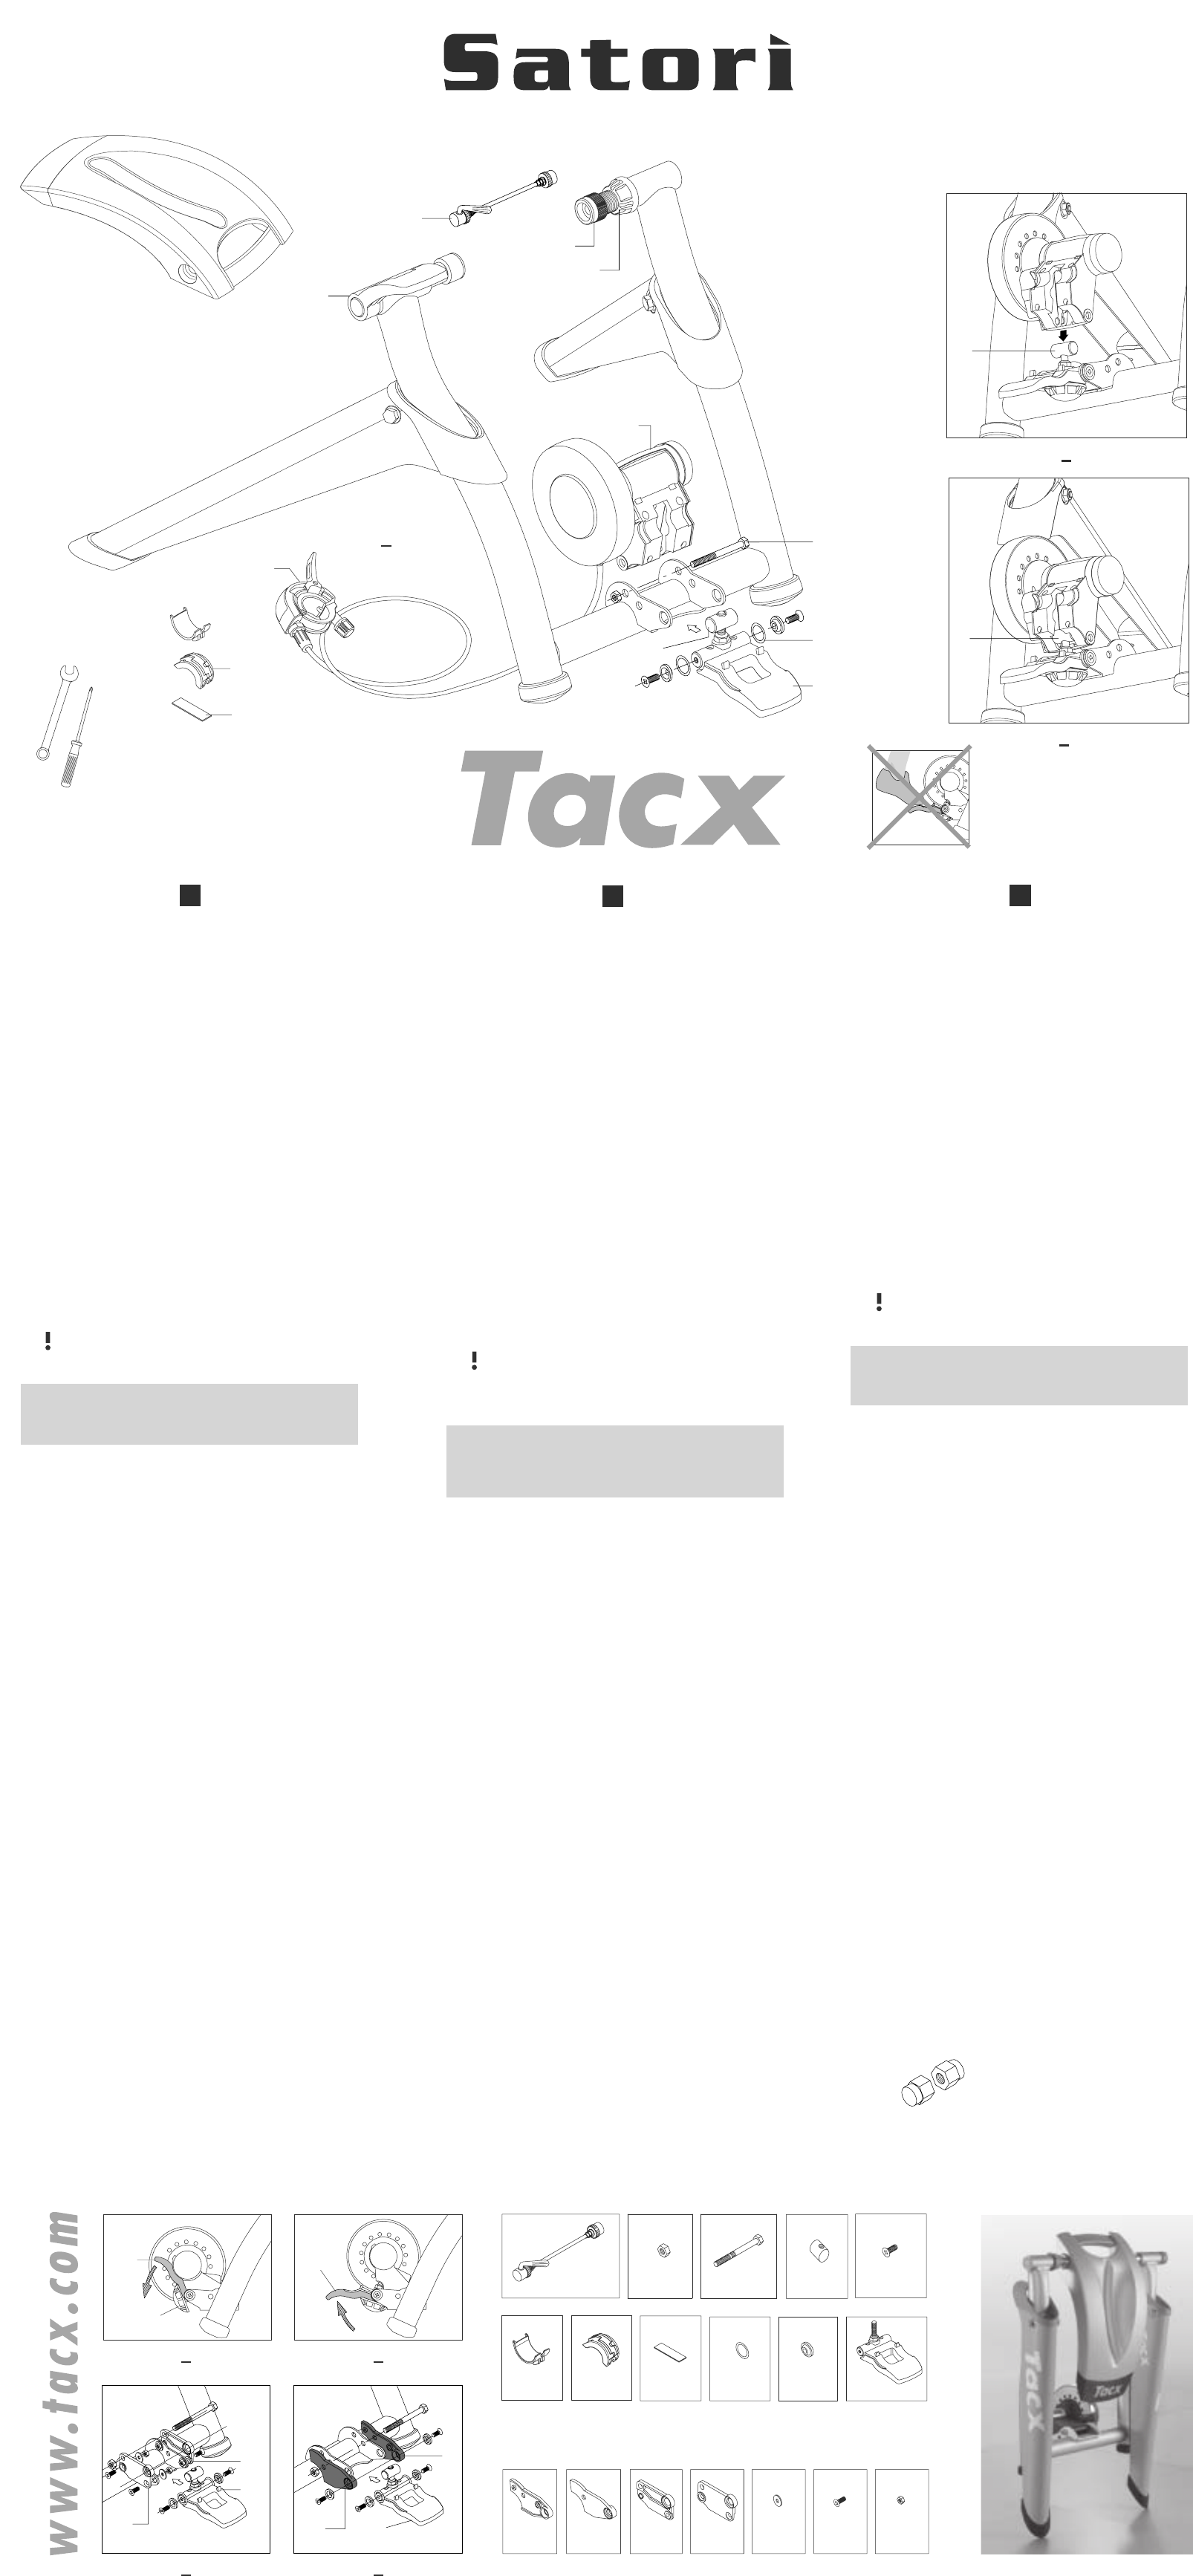 handelaar marionet inrichting Manual Tacx Satori (page 1 of 2) (English, German, Dutch, French, Italian,  Spanish)